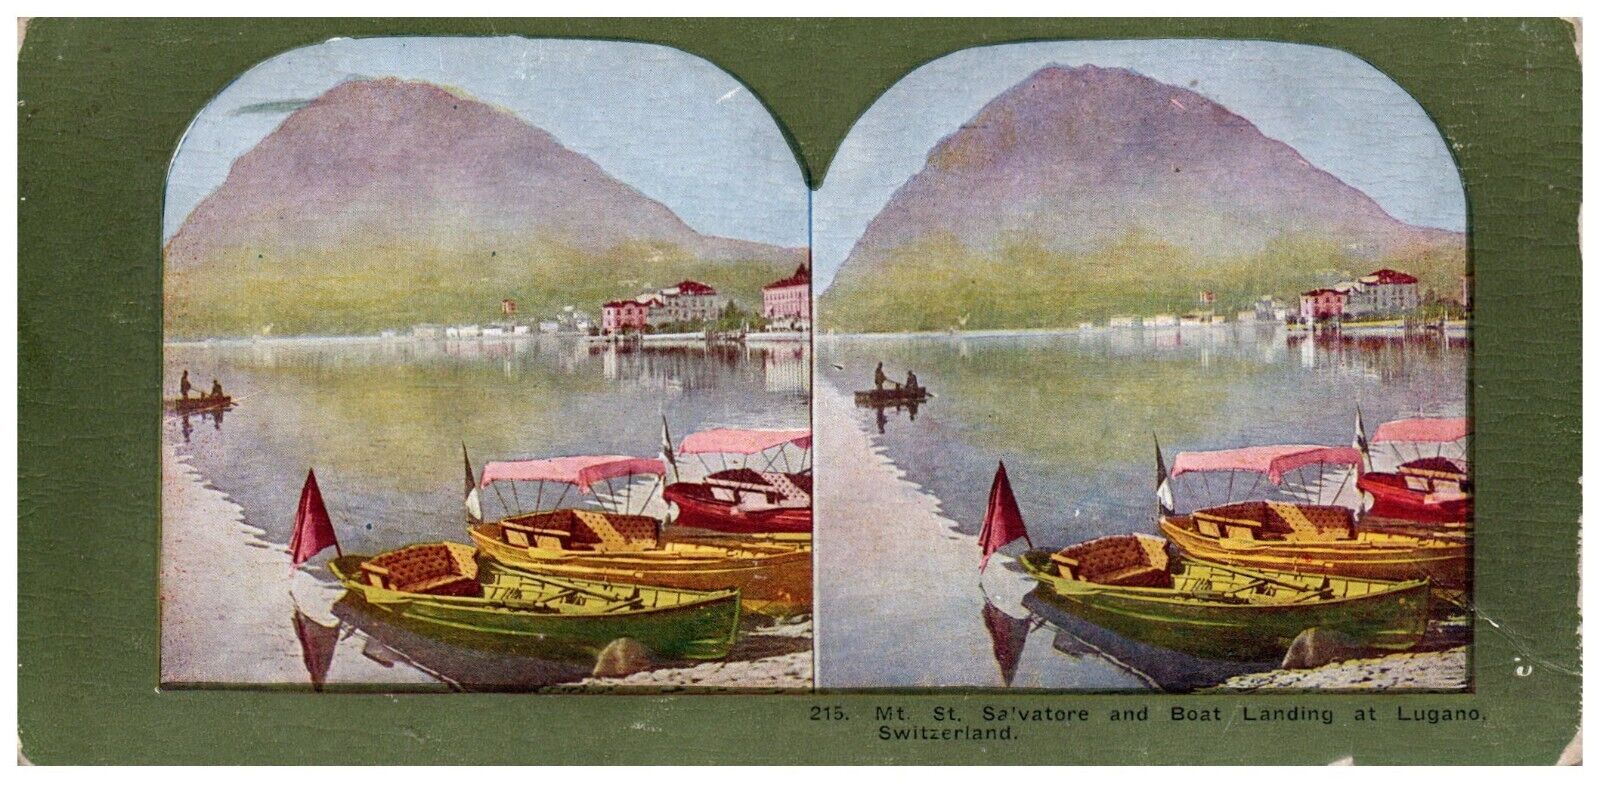 Stereoscope Mt St Salvatore & Boat Landings Lugano Switzerland Card 215